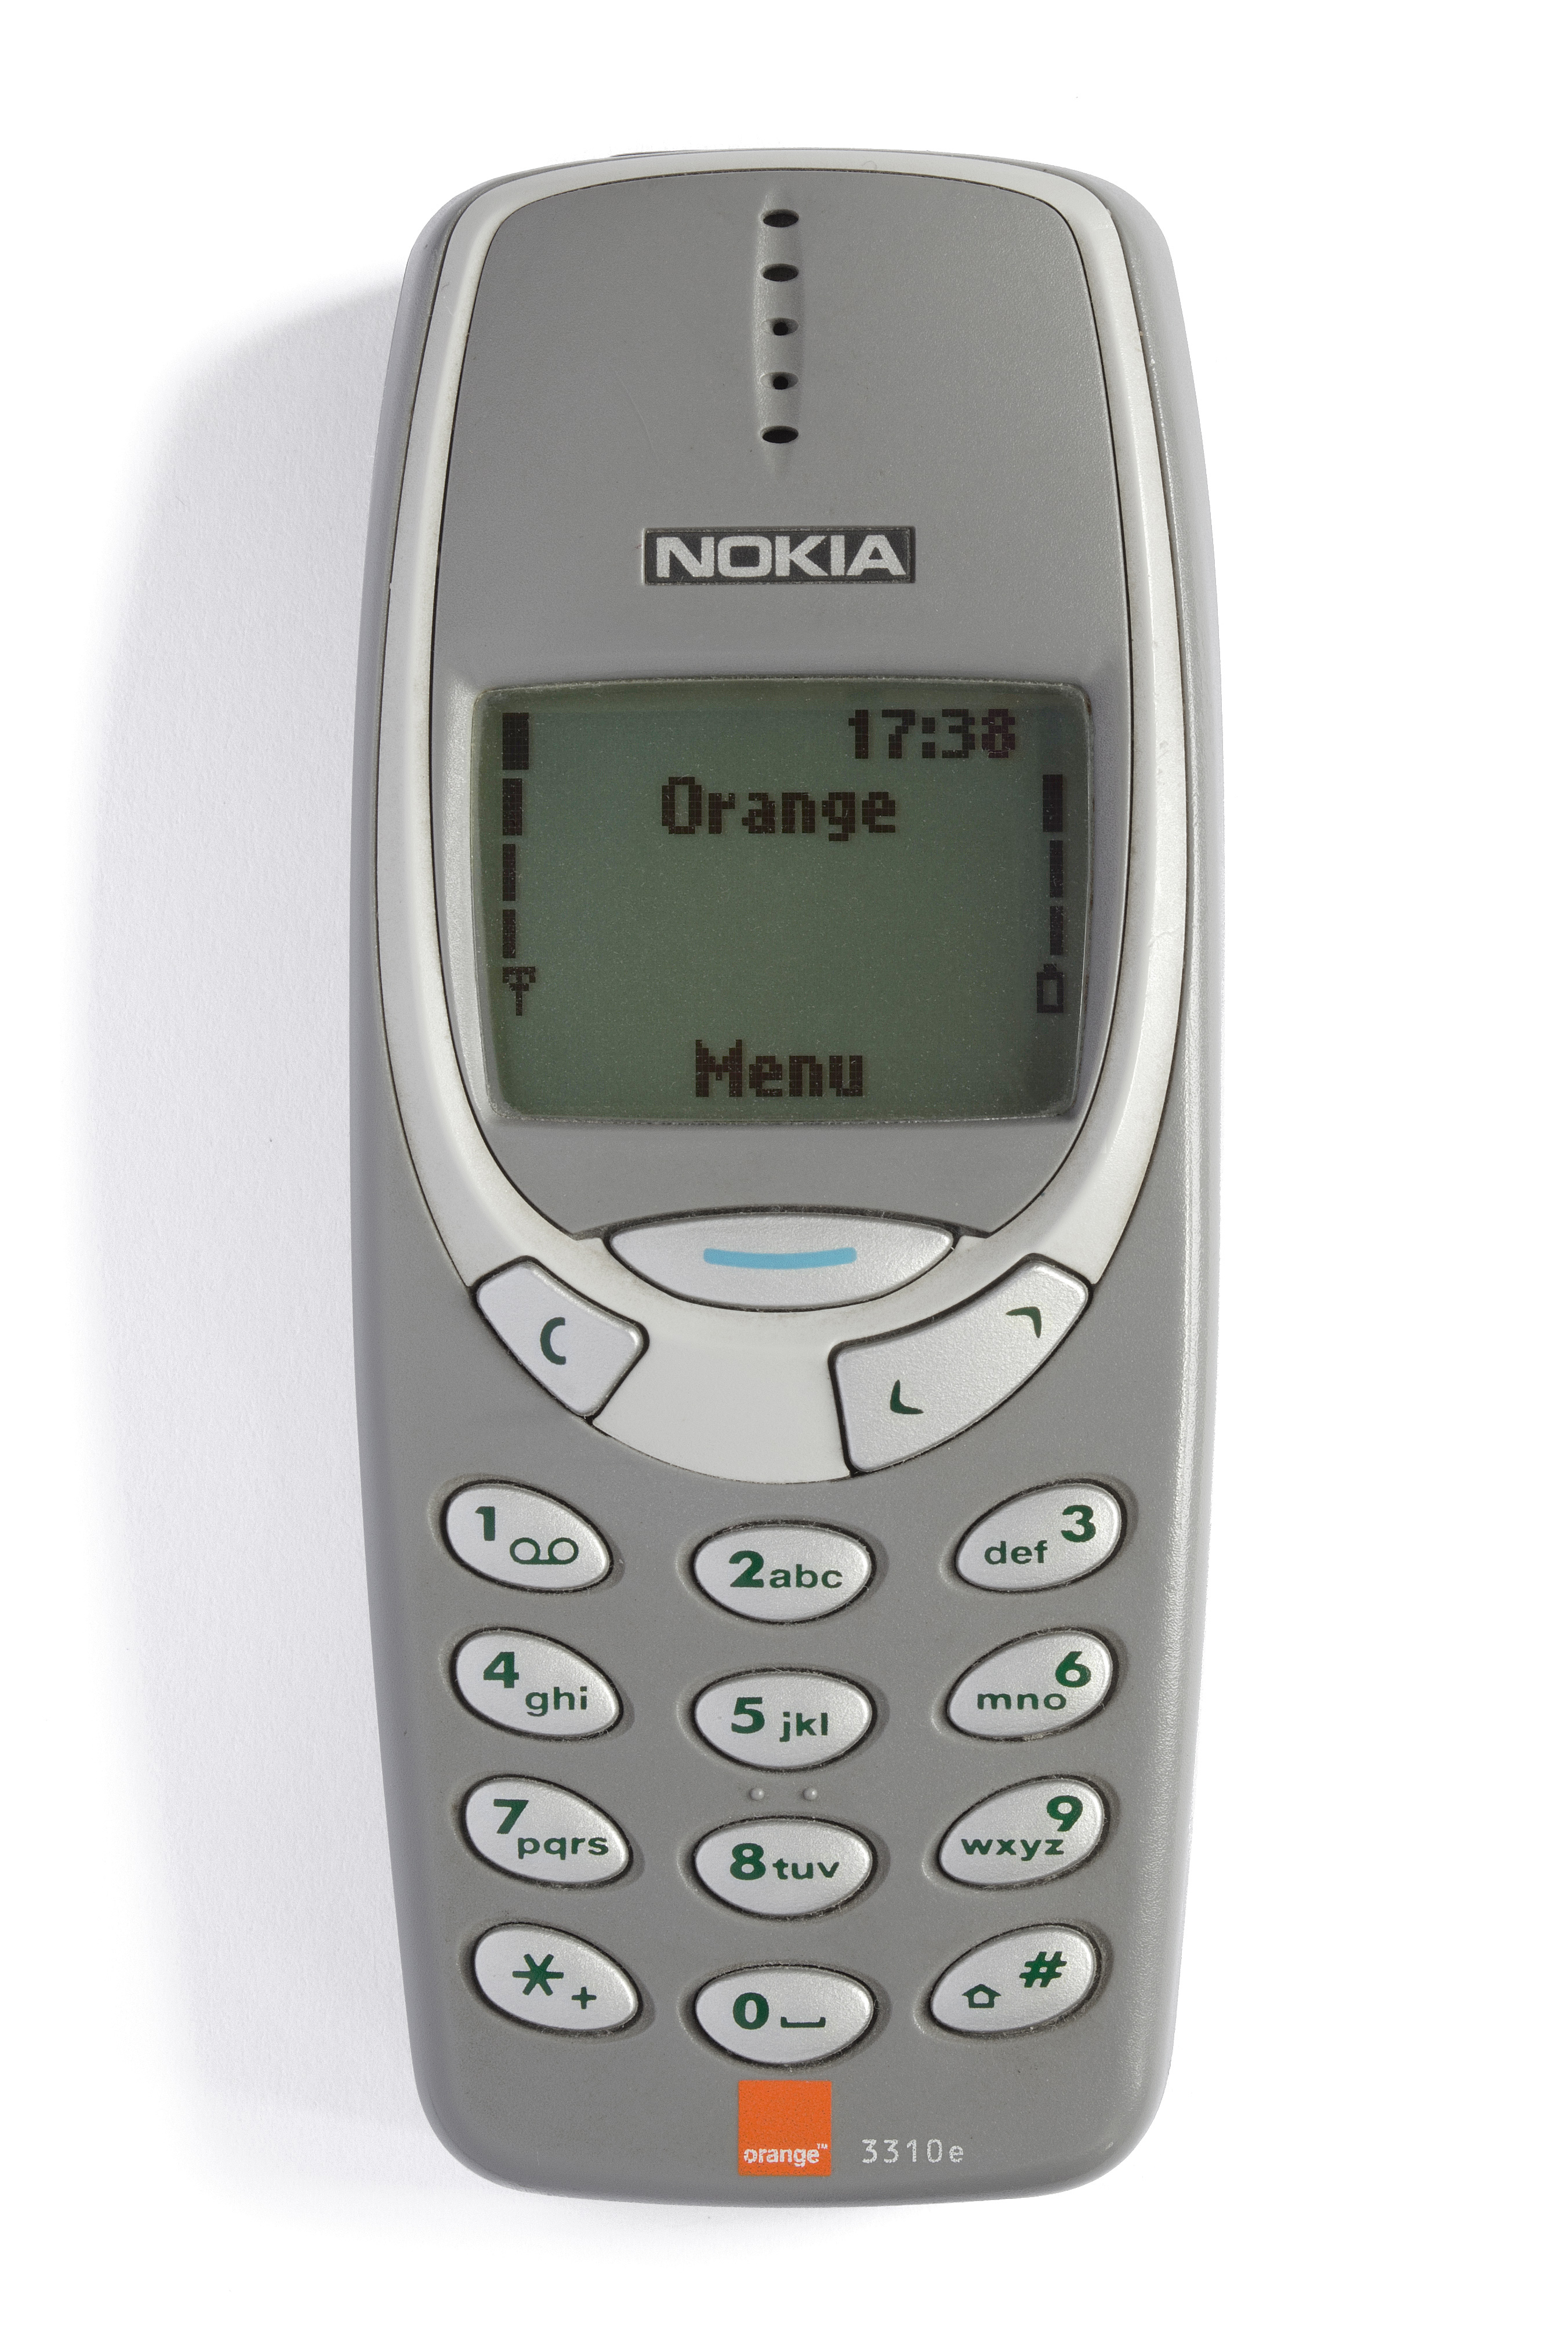 Nokia 3310 grey - imrich.net